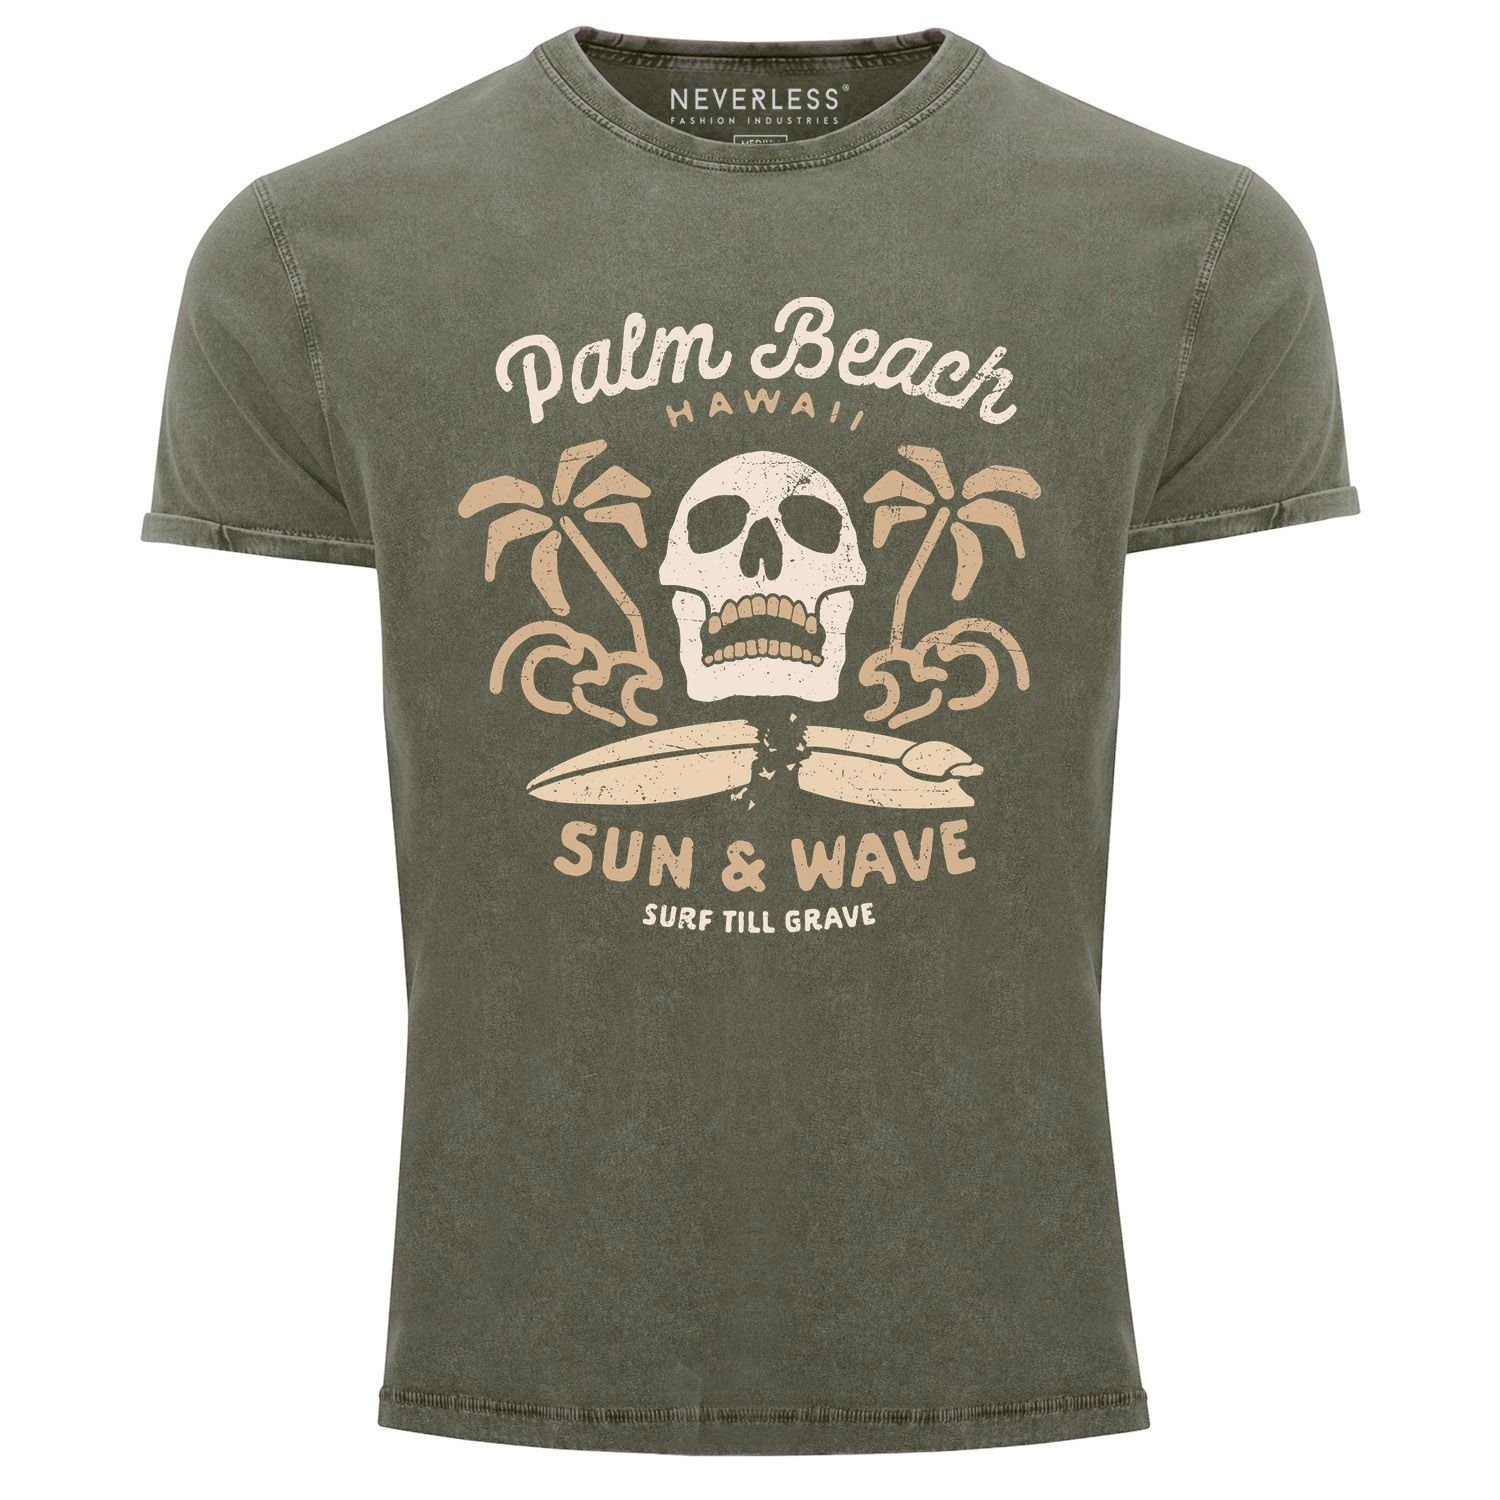 Neverless Print-Shirt Neverless® Herren T-Shirt Surf-Motiv Totenkopf Palm Beach Vintage Shirt mit Print oliv